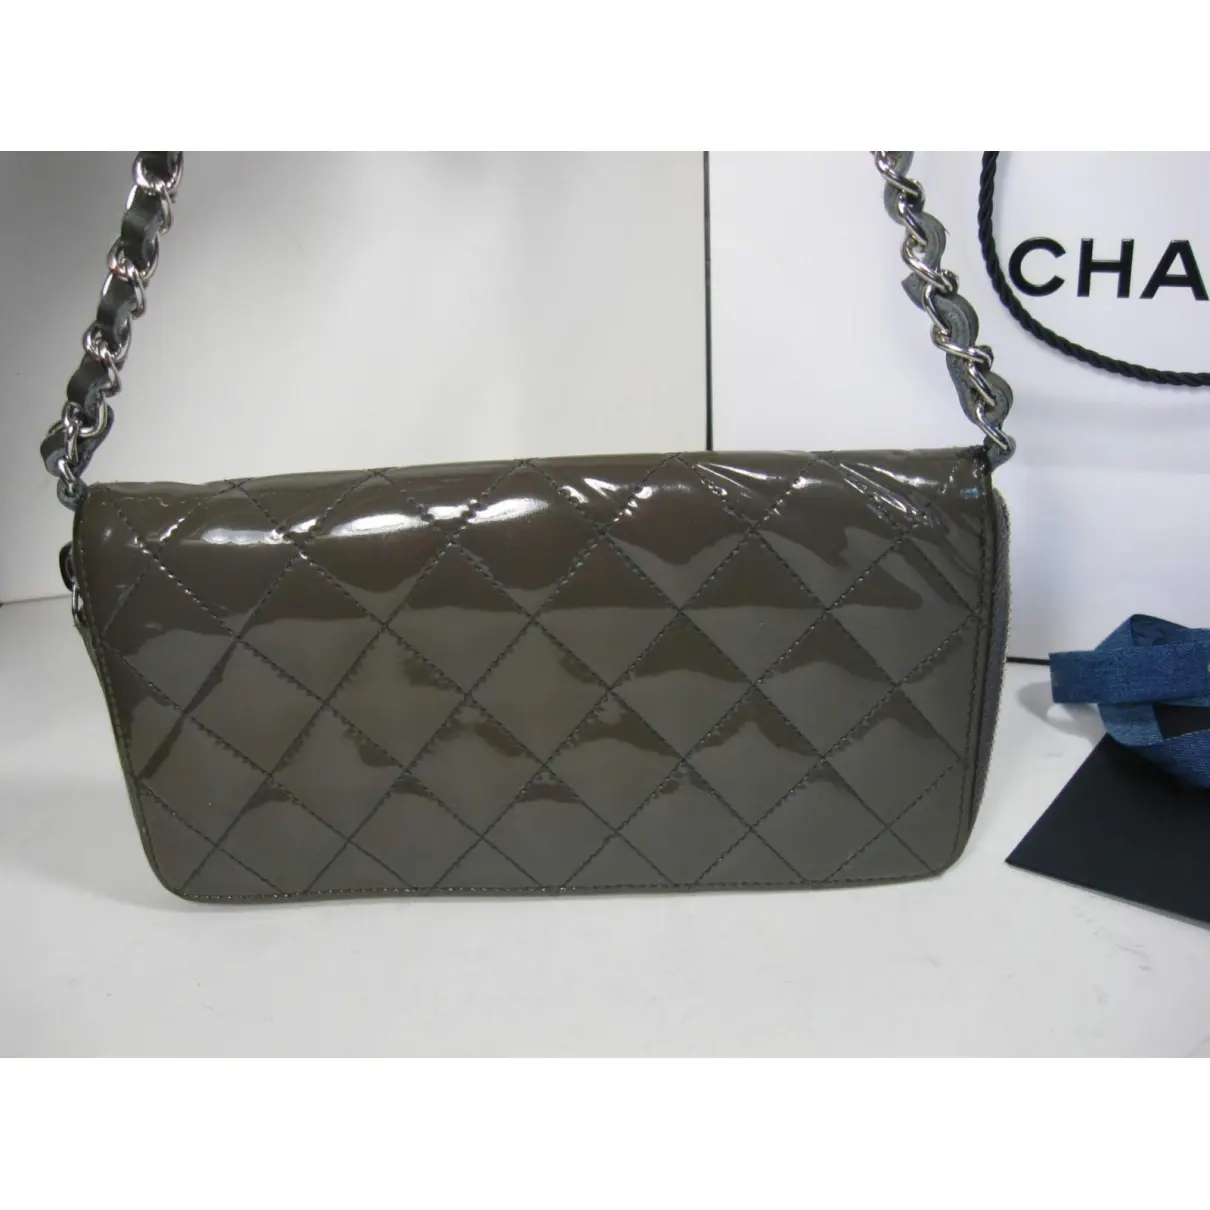 Patent leather handbag Chanel